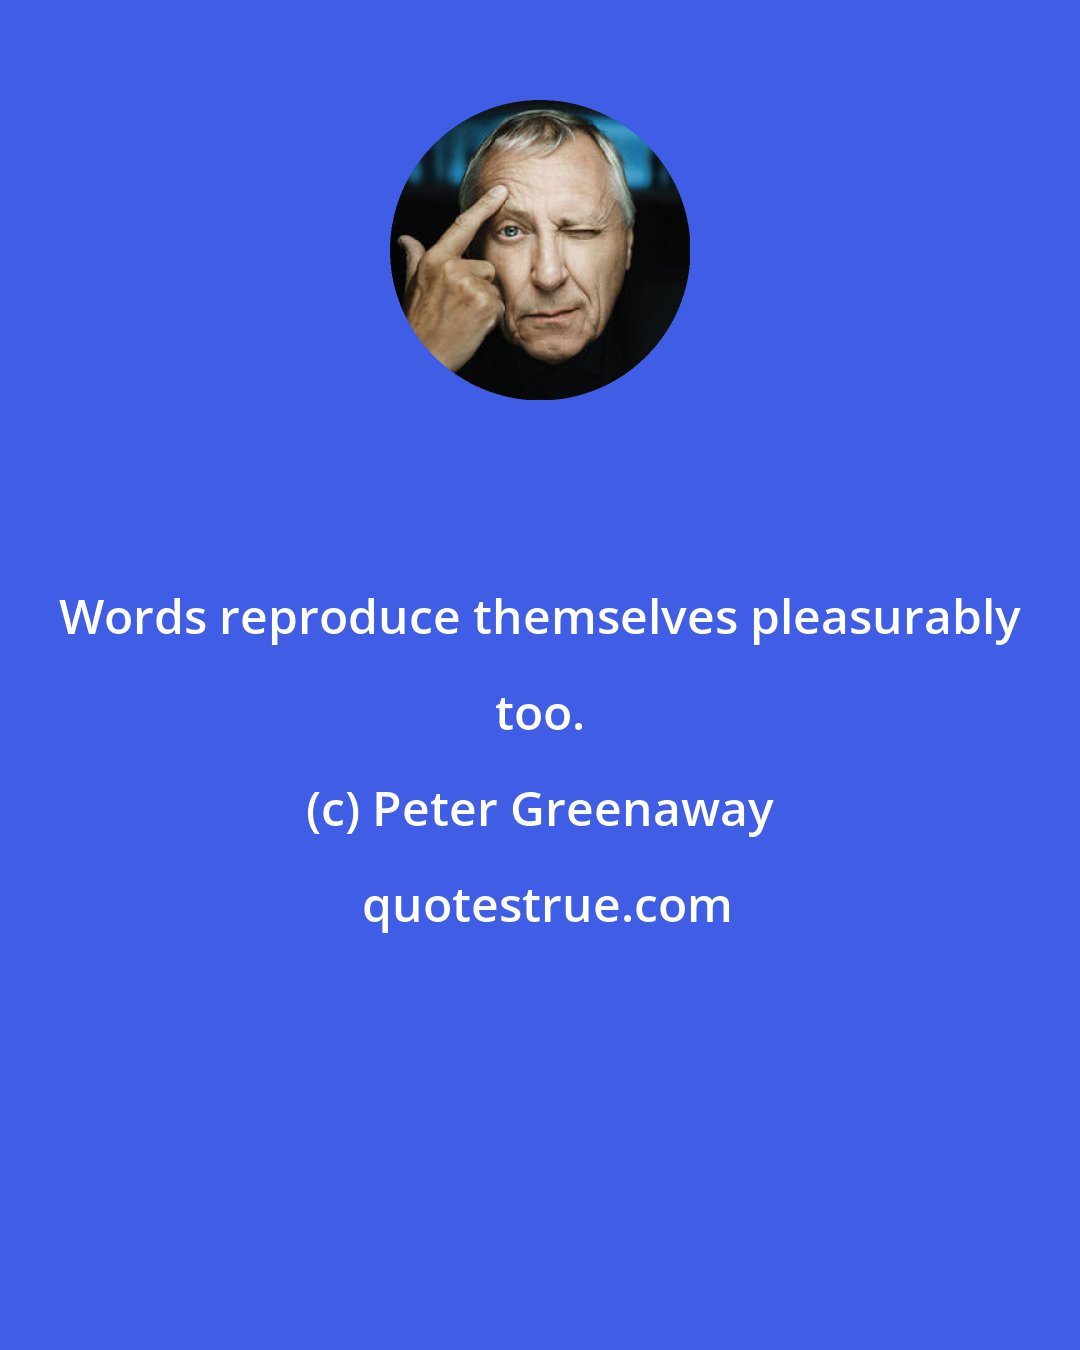 Peter Greenaway: Words reproduce themselves pleasurably too.